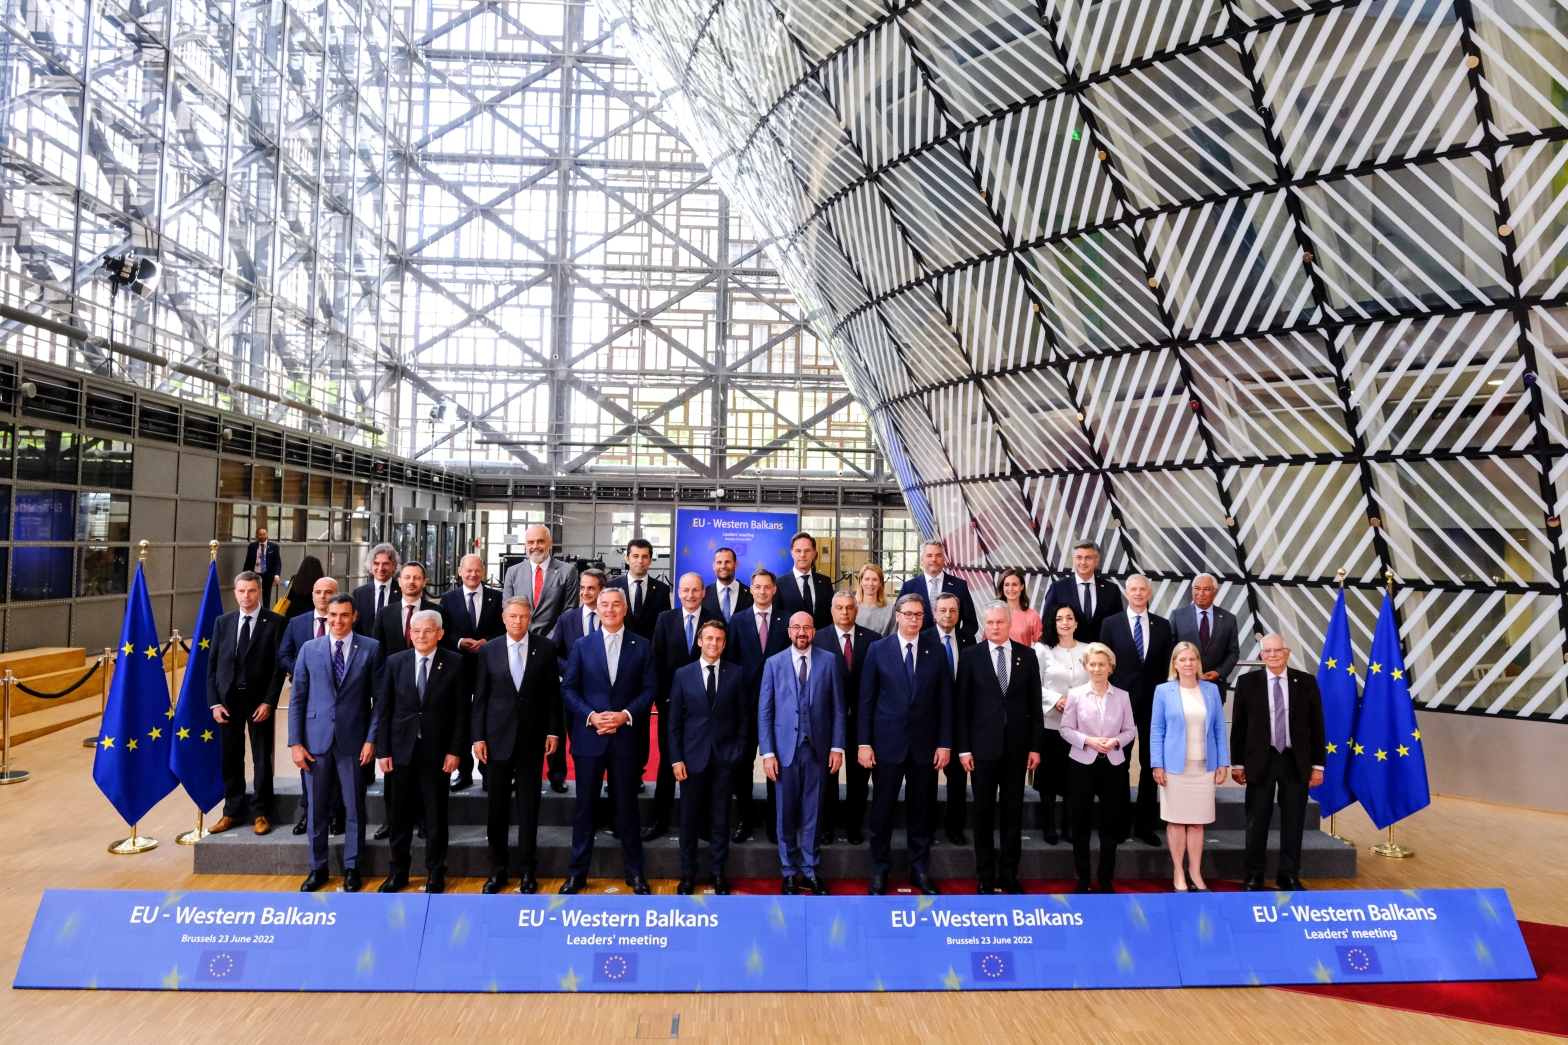 EU-Western Balkans Leaders' Meeting, June 2022/Source: https://www.consilium.europa.eu/media/57308/familyphoto.jpg